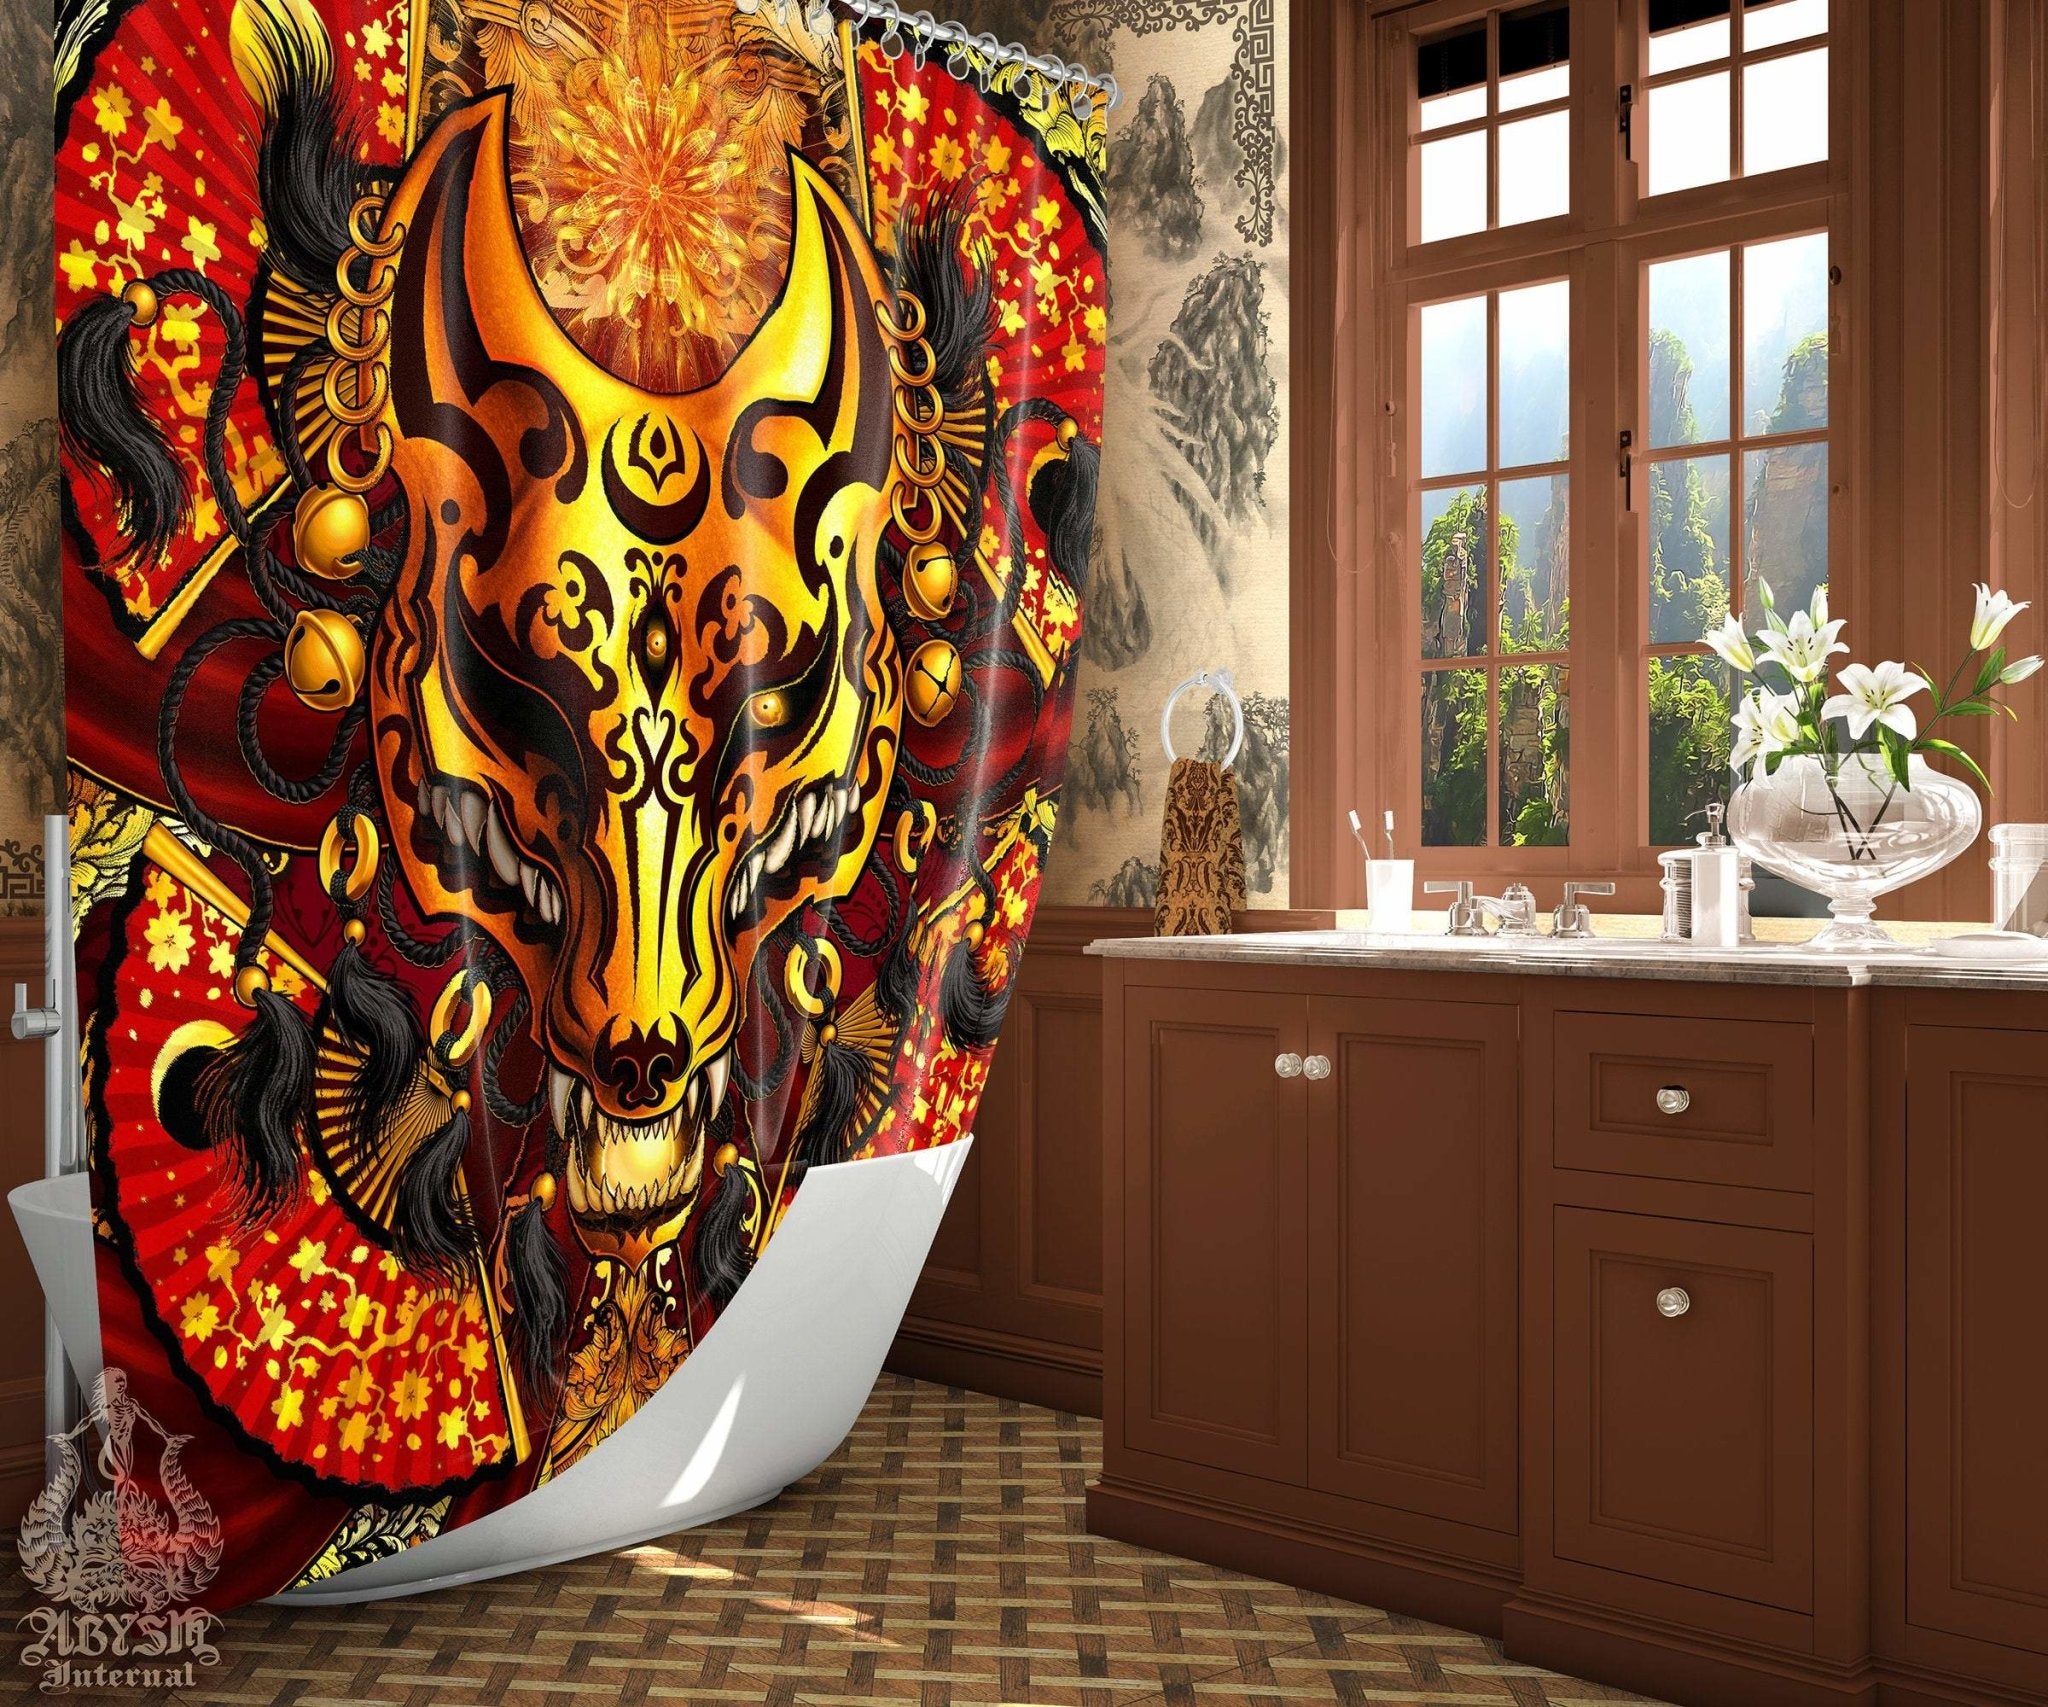 Kitsune Shower Curtain, Japanese Fox Mask, Okami, Anime and Gamer Bathroom Decor - Gold - Abysm Internal